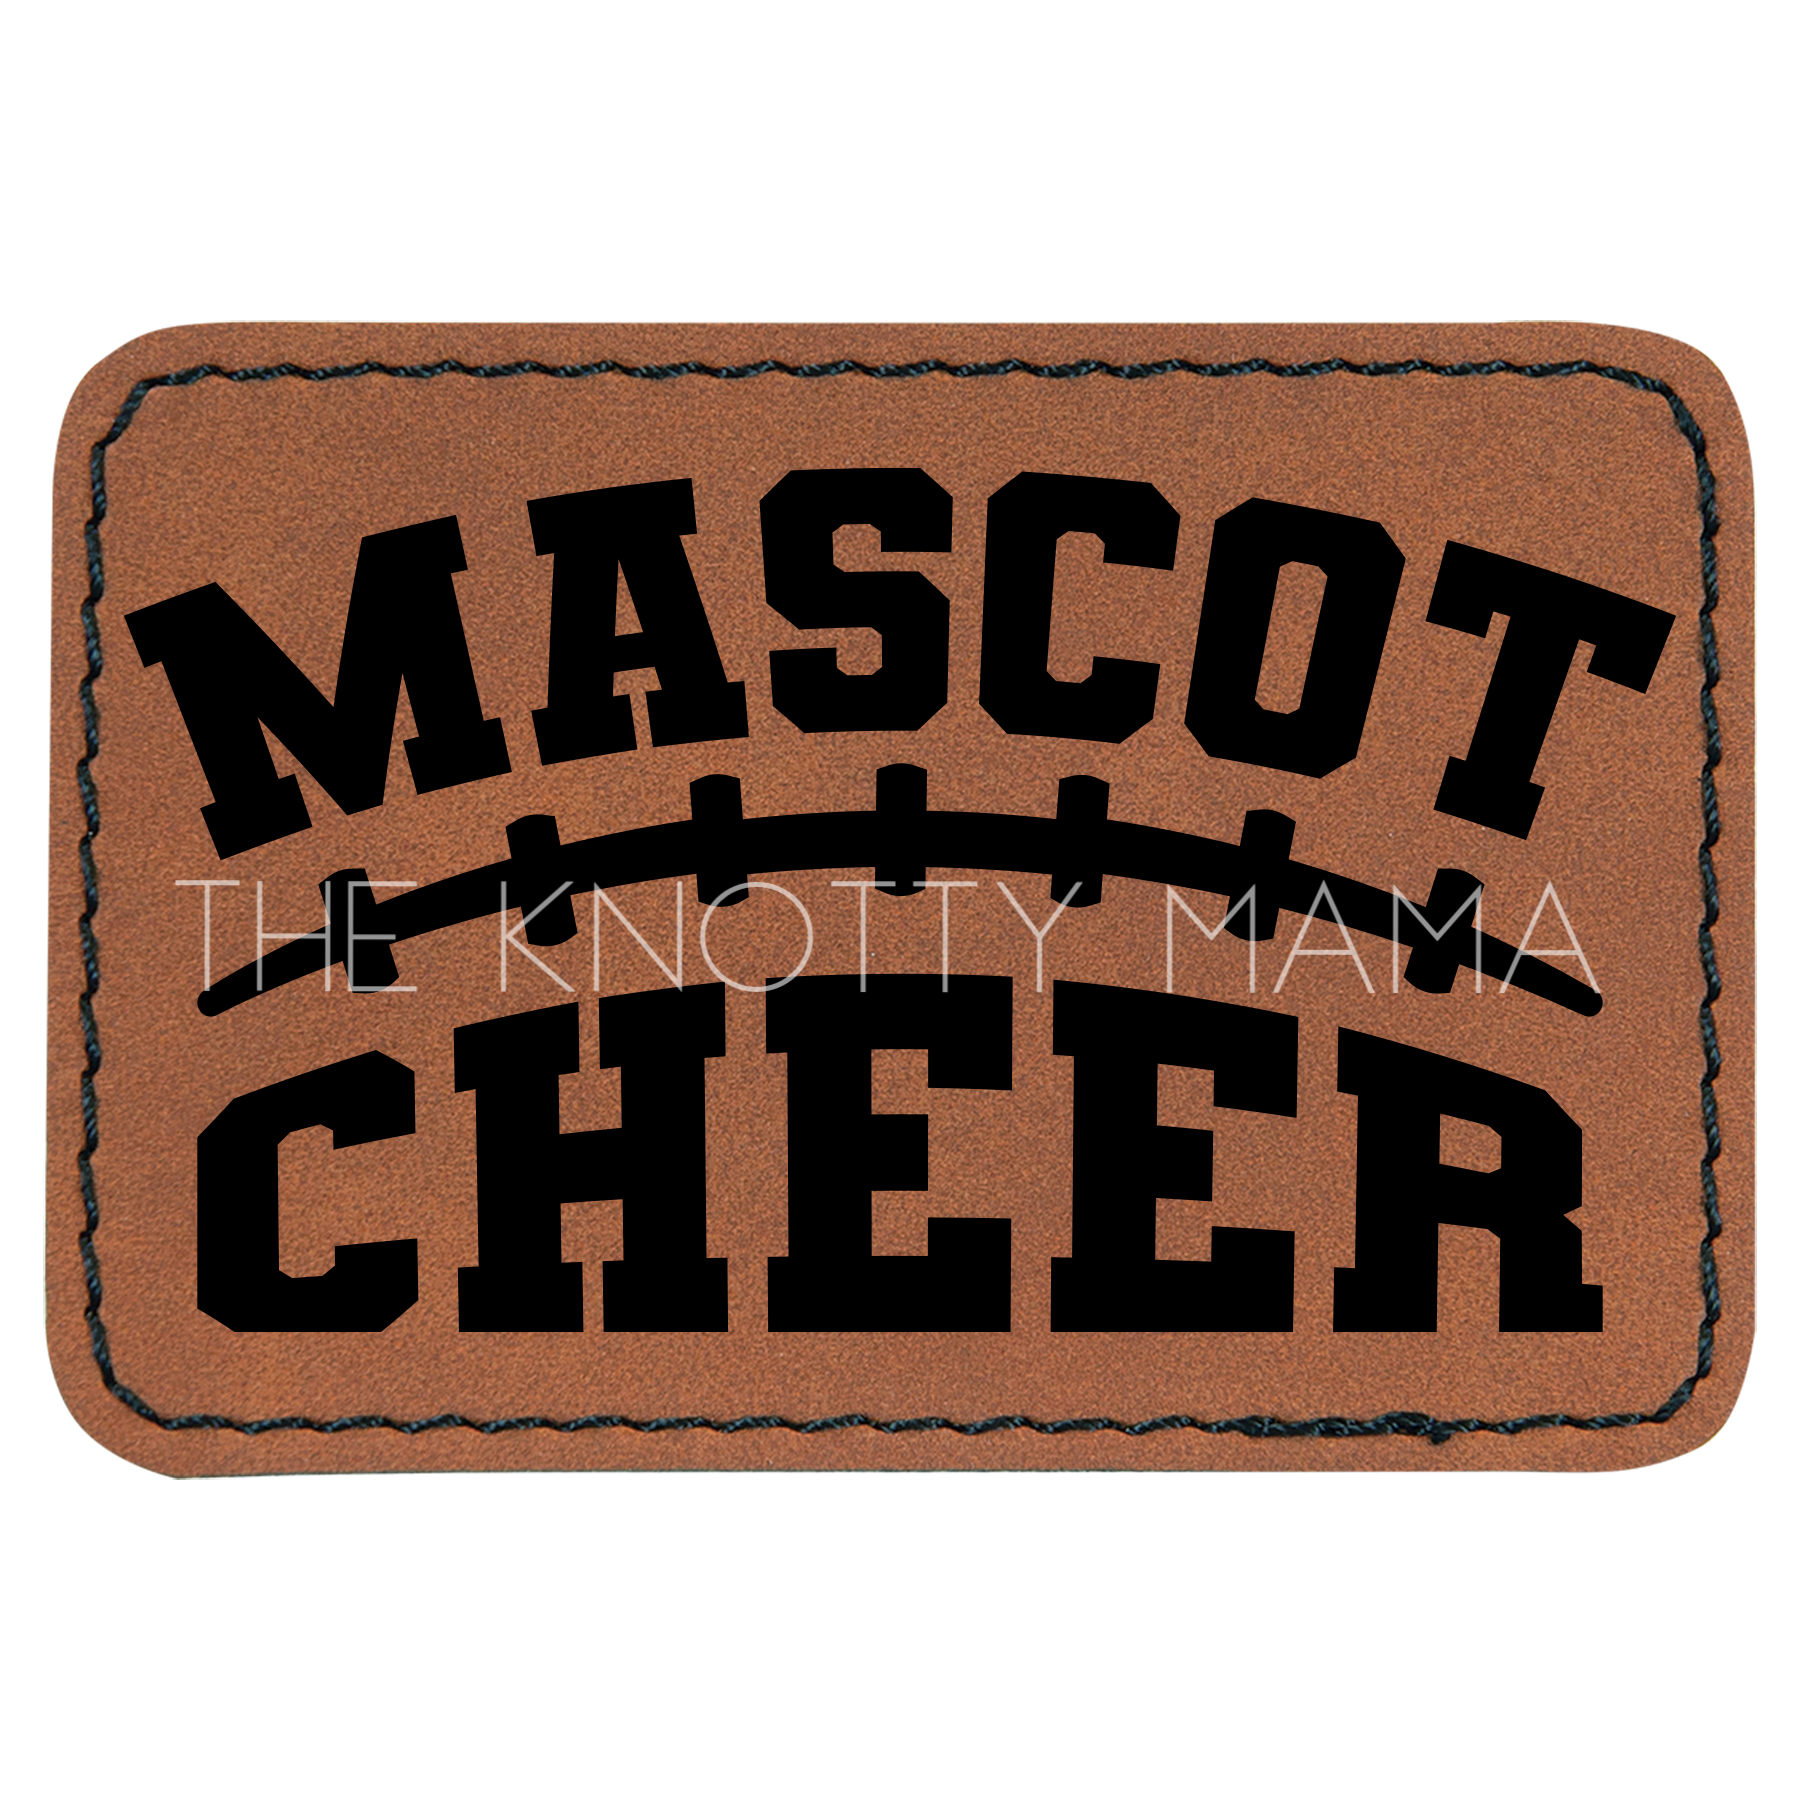 Custom Football Cheer Mascot Patch